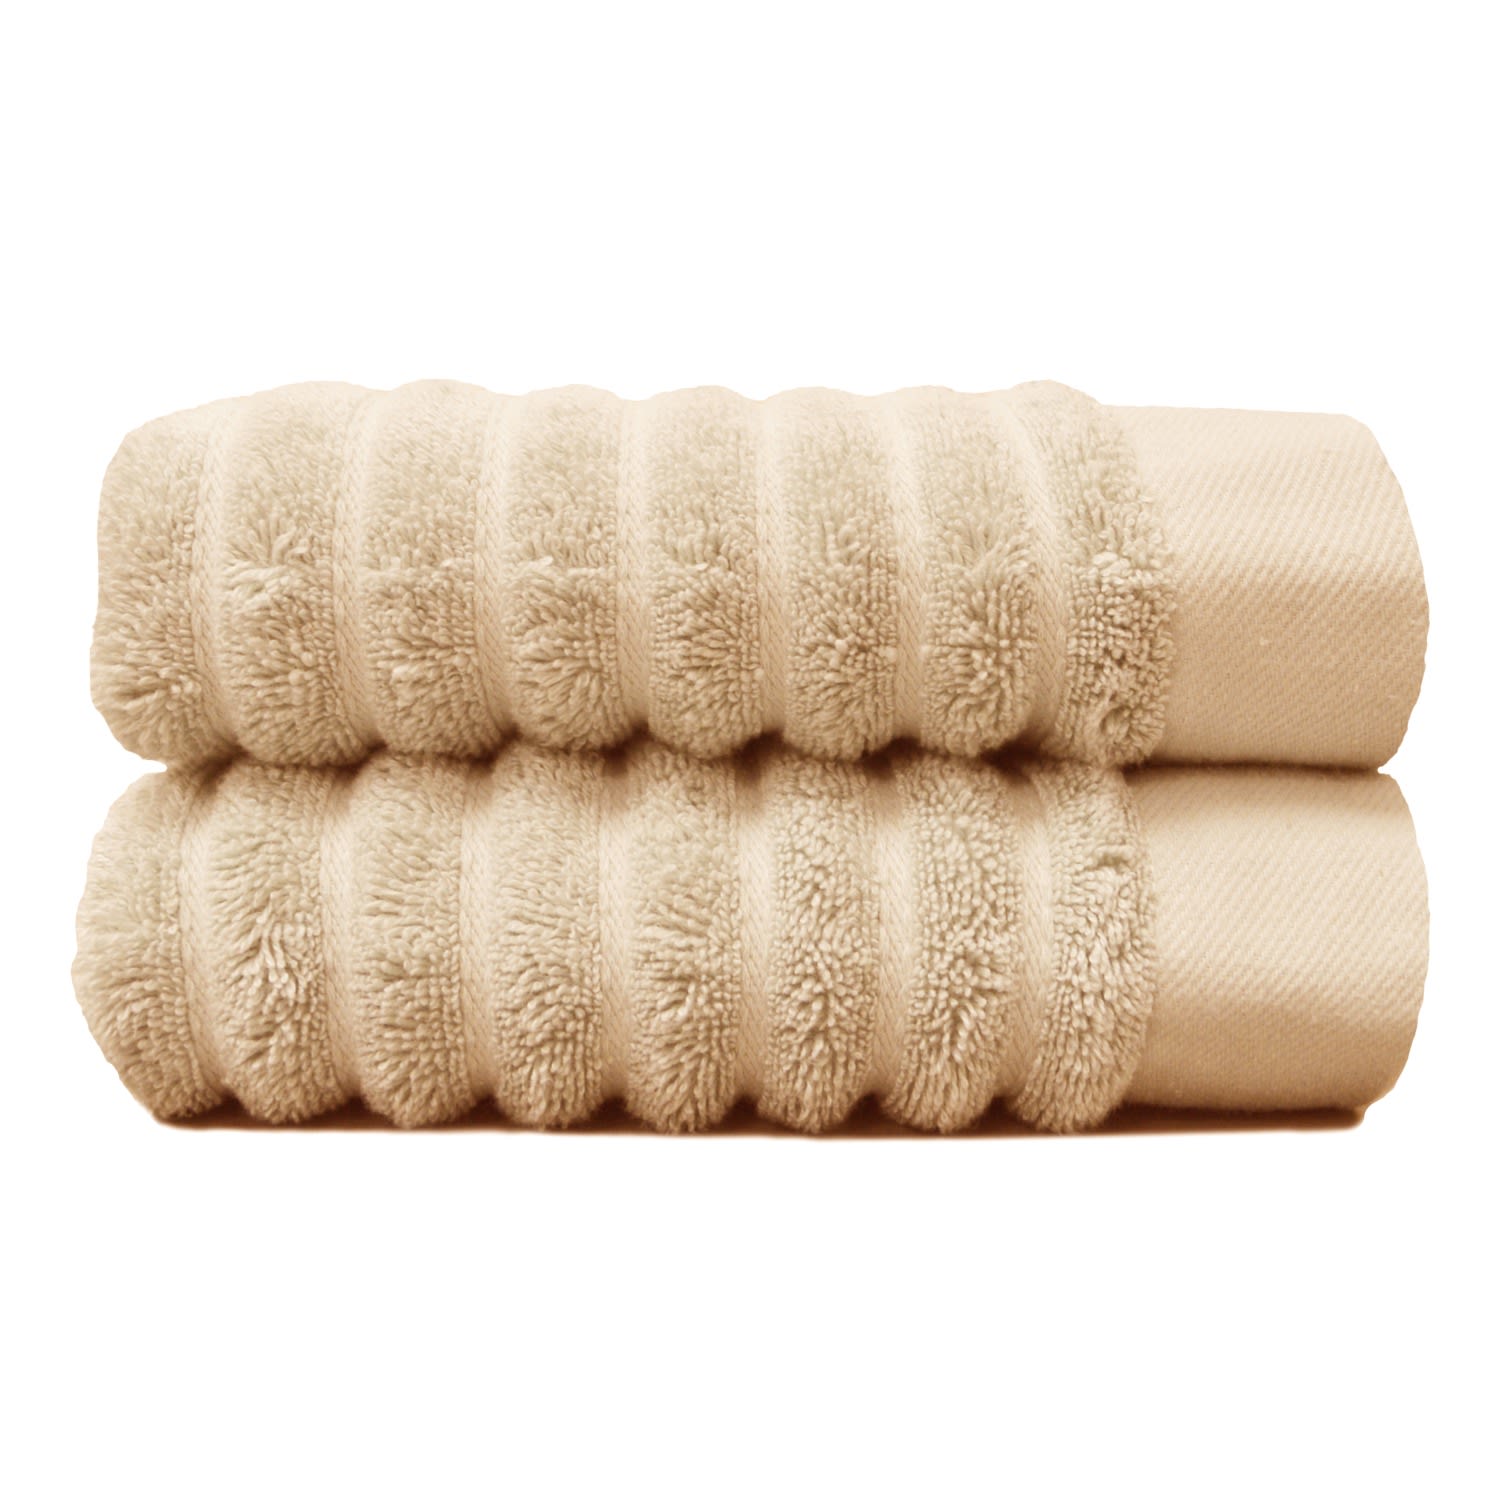 Neutrals Organic Cotton Bath Sheet Set - Natural One Size Misona